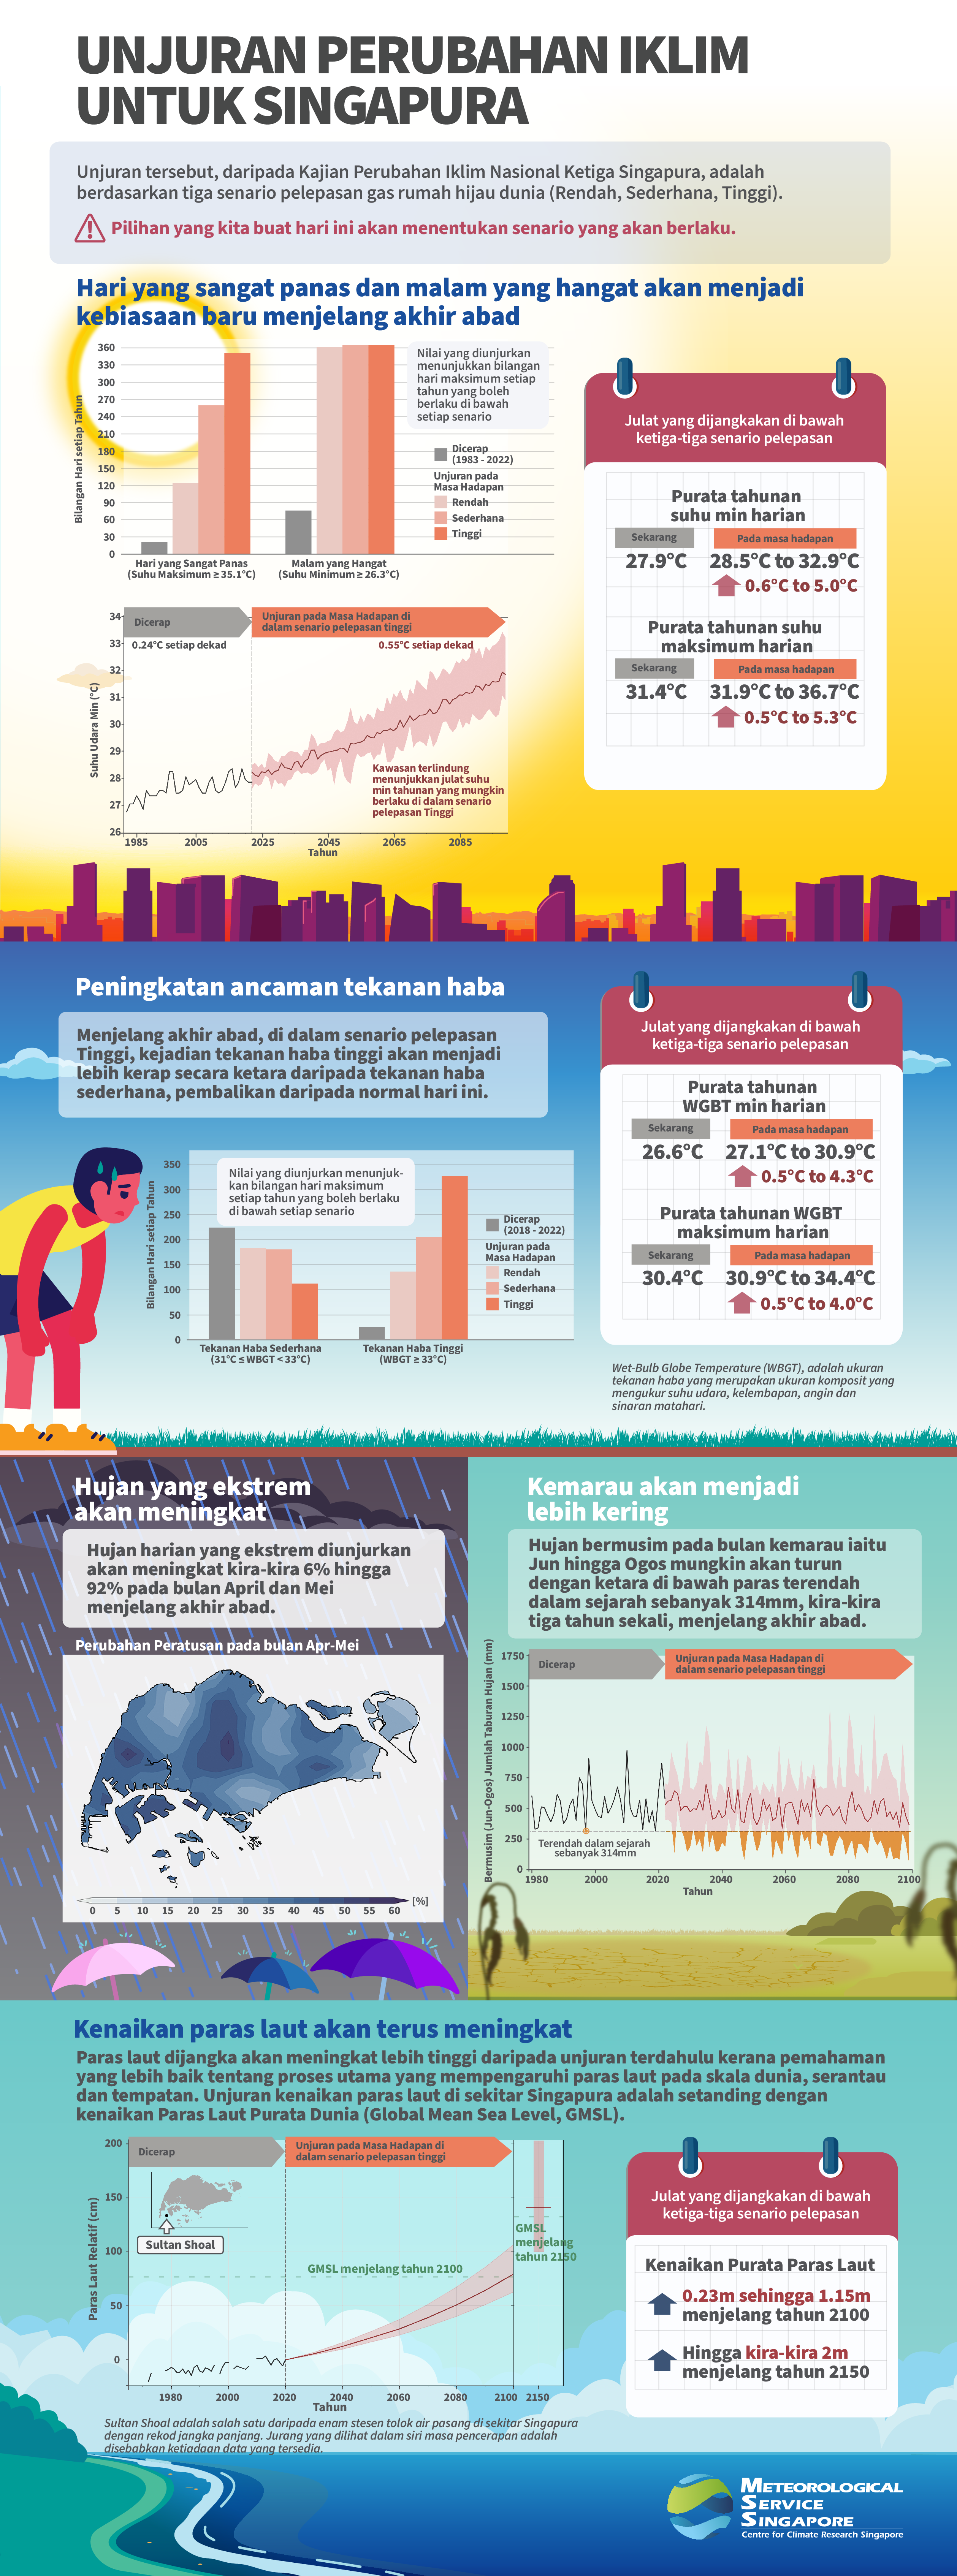 V3-Infographic-Malay